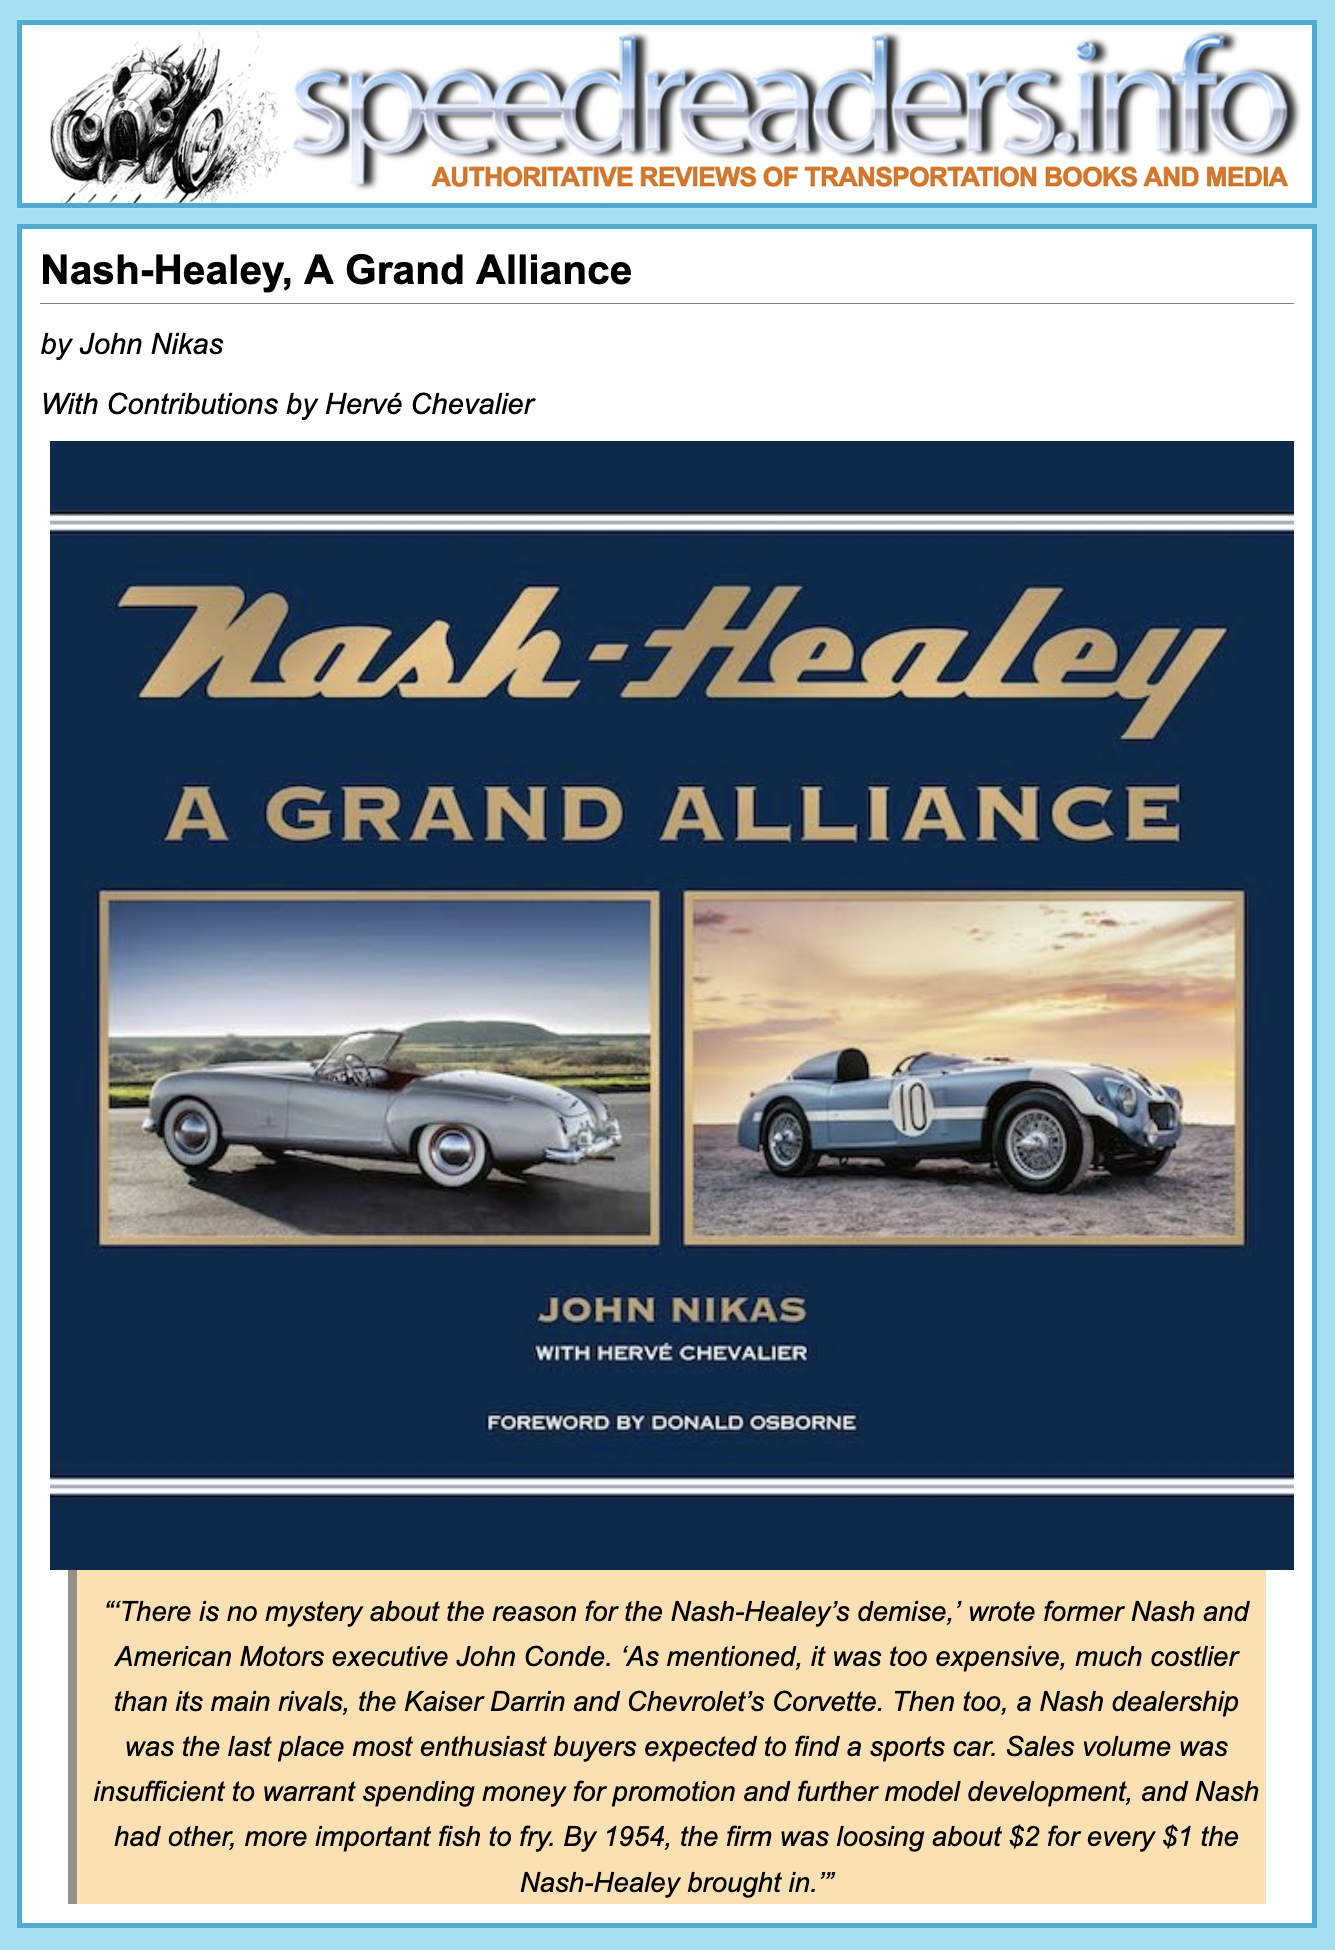 Nash-Healey by John Nikas